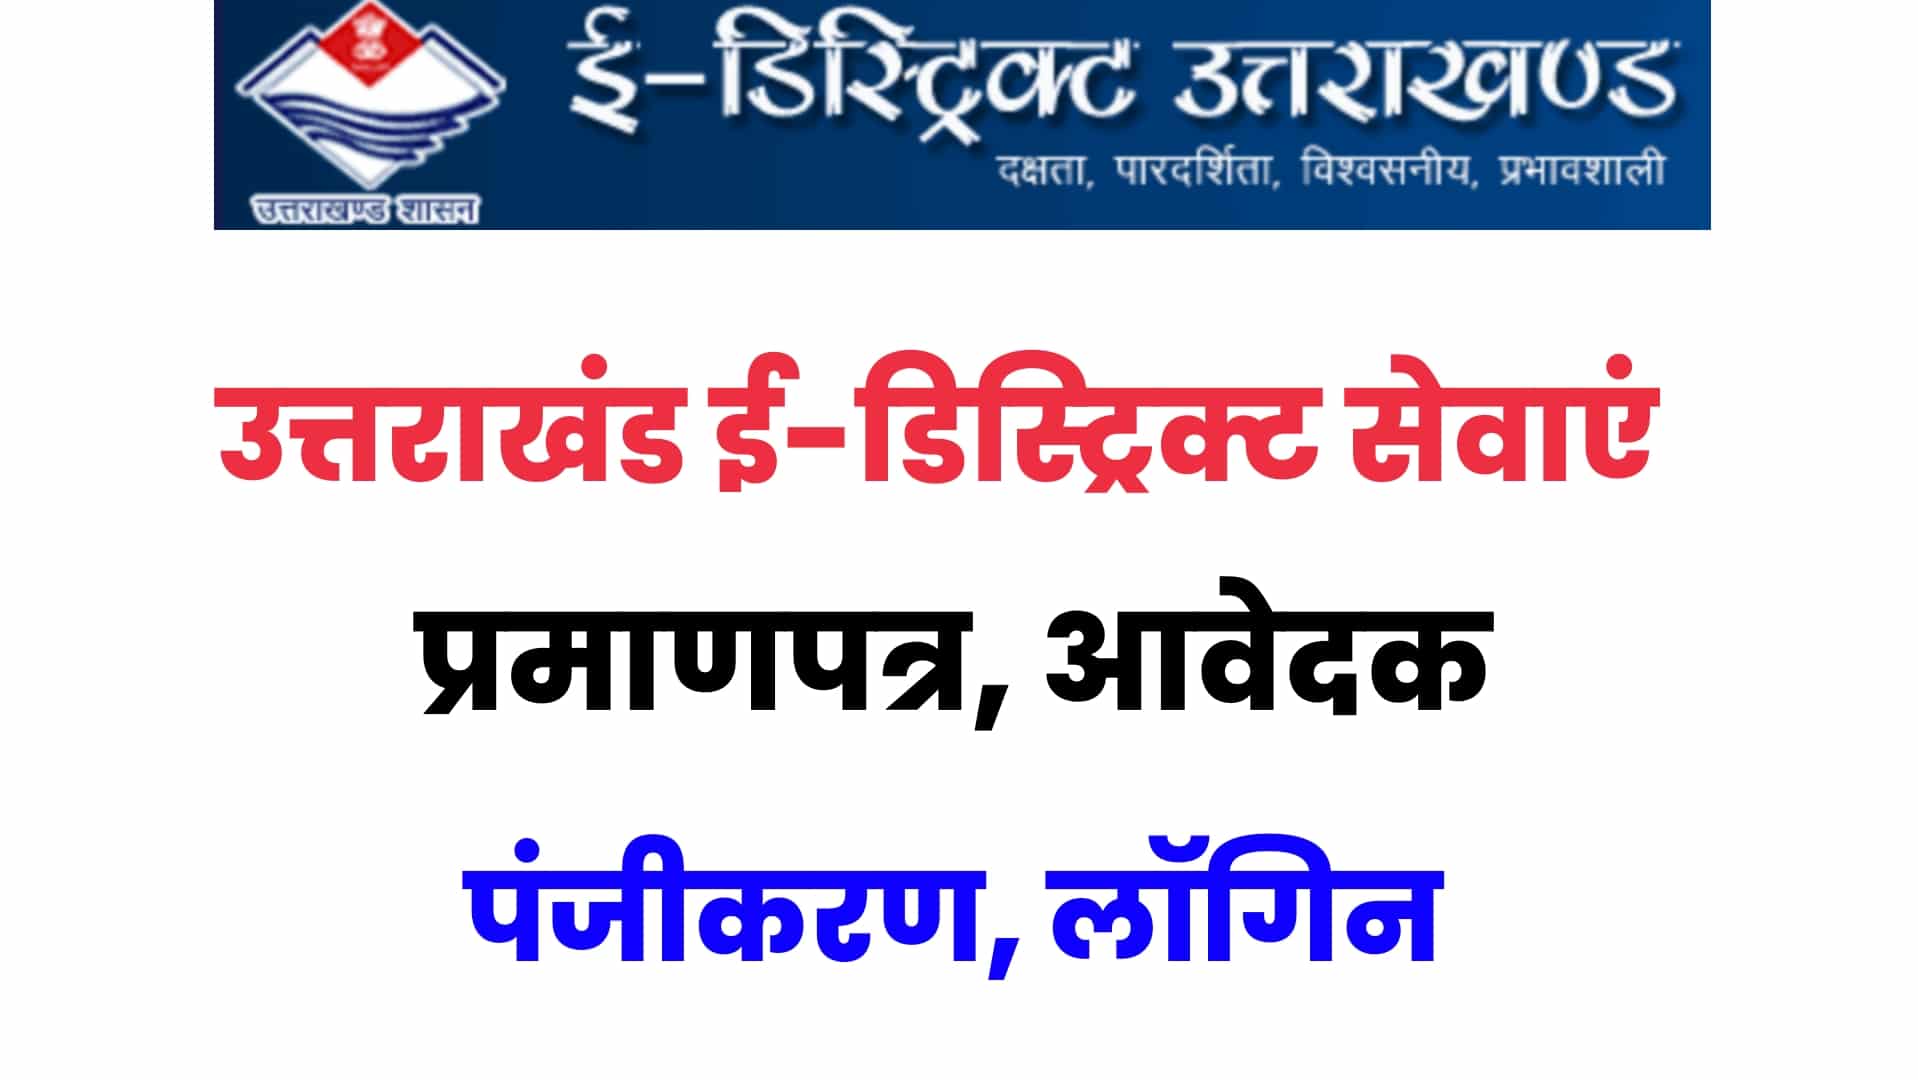 e-District Uttarakhand : उत्तराखंड ई-डिस्ट्रिक्ट सेवाएं, प्रमाणपत्र, आवेदक पंजीकरण, लॉगिन